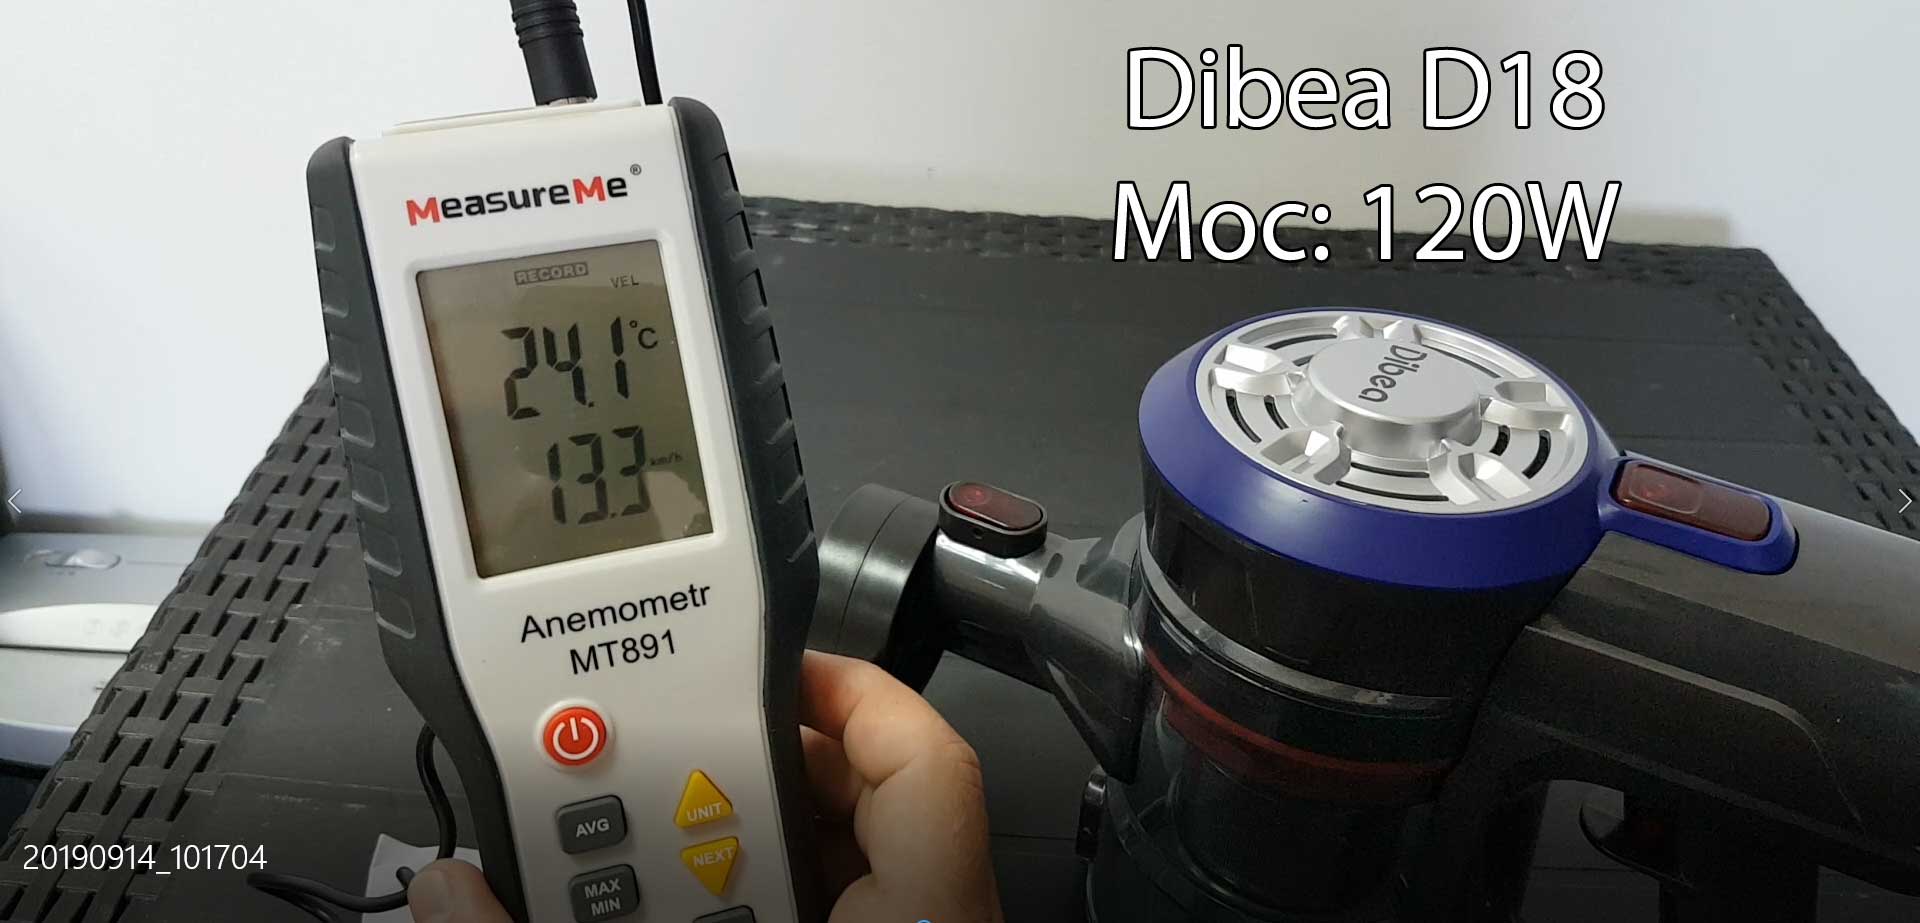 Dibea D18 opinie test recenzja